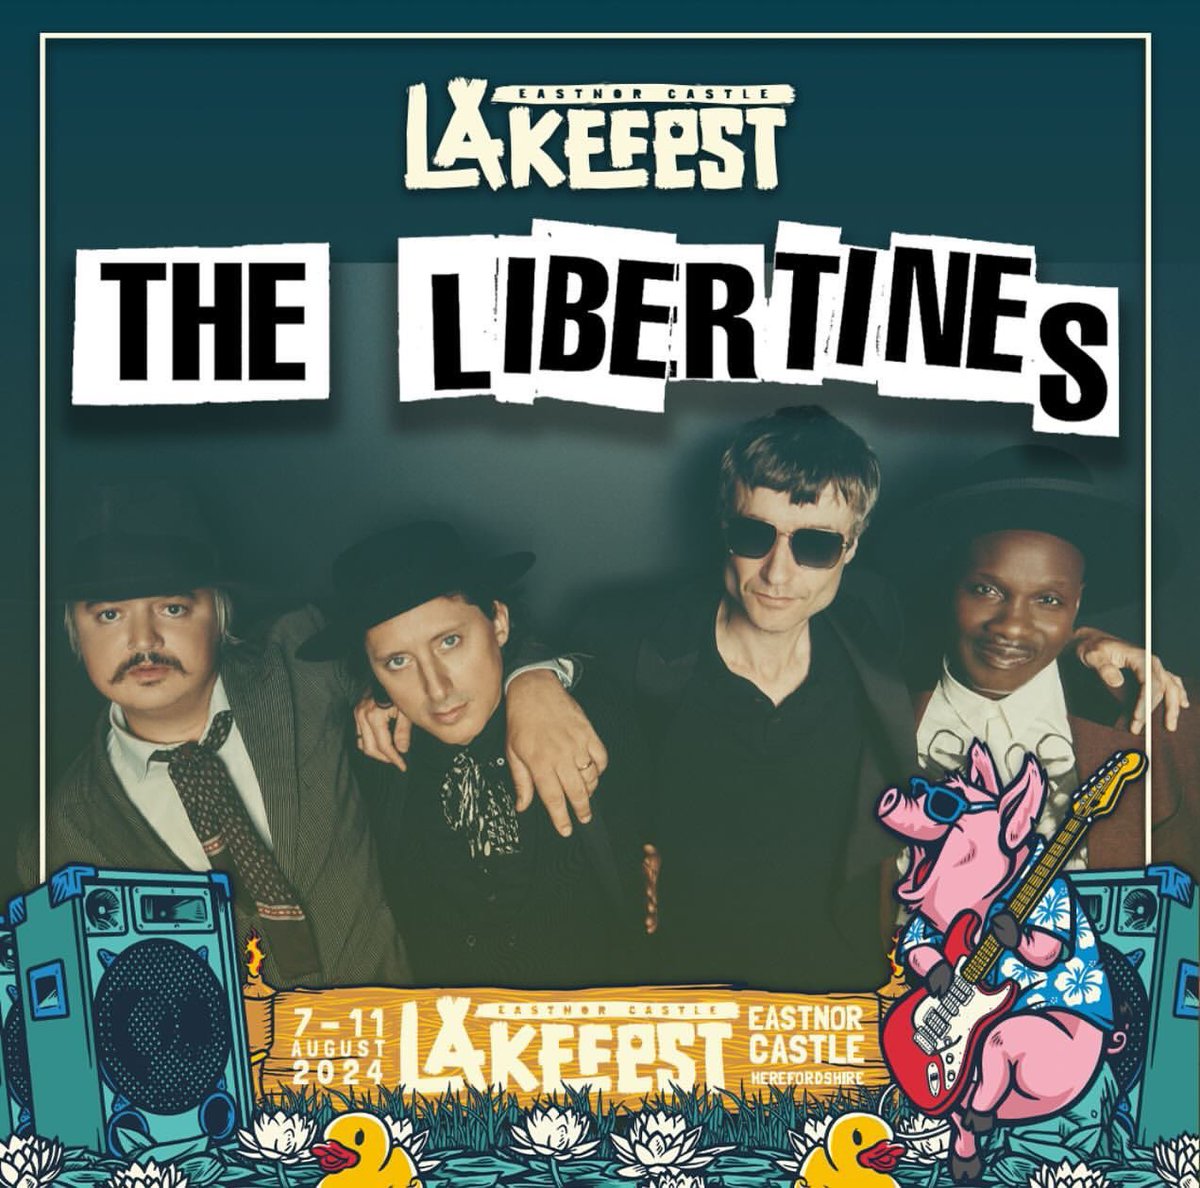 Got your tickets for @Lakefestuk yet? 🖤